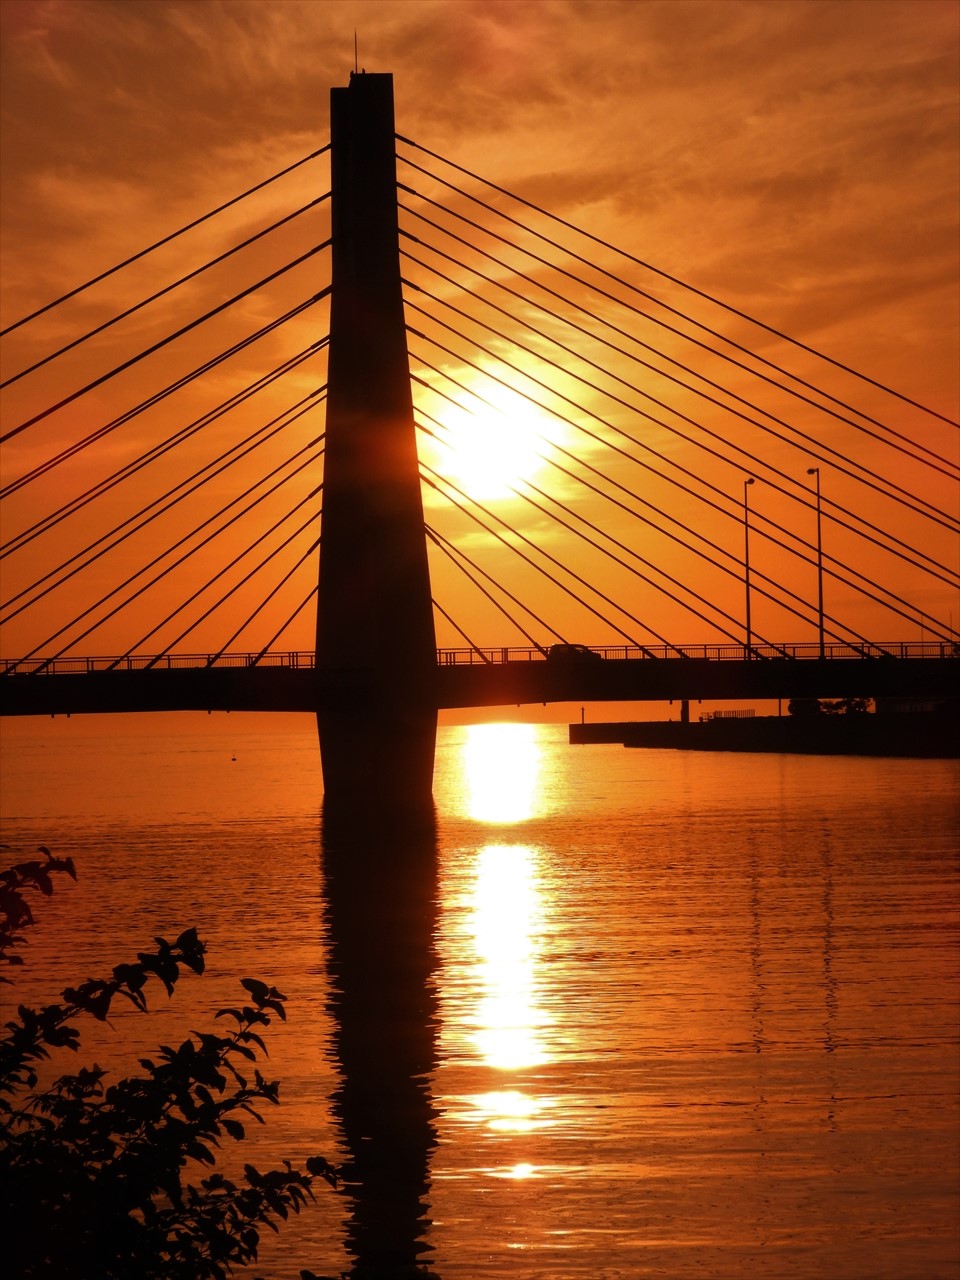 DSCN0955 (2)昇陽と斜張橋２０２２年８月３日AM５：３７